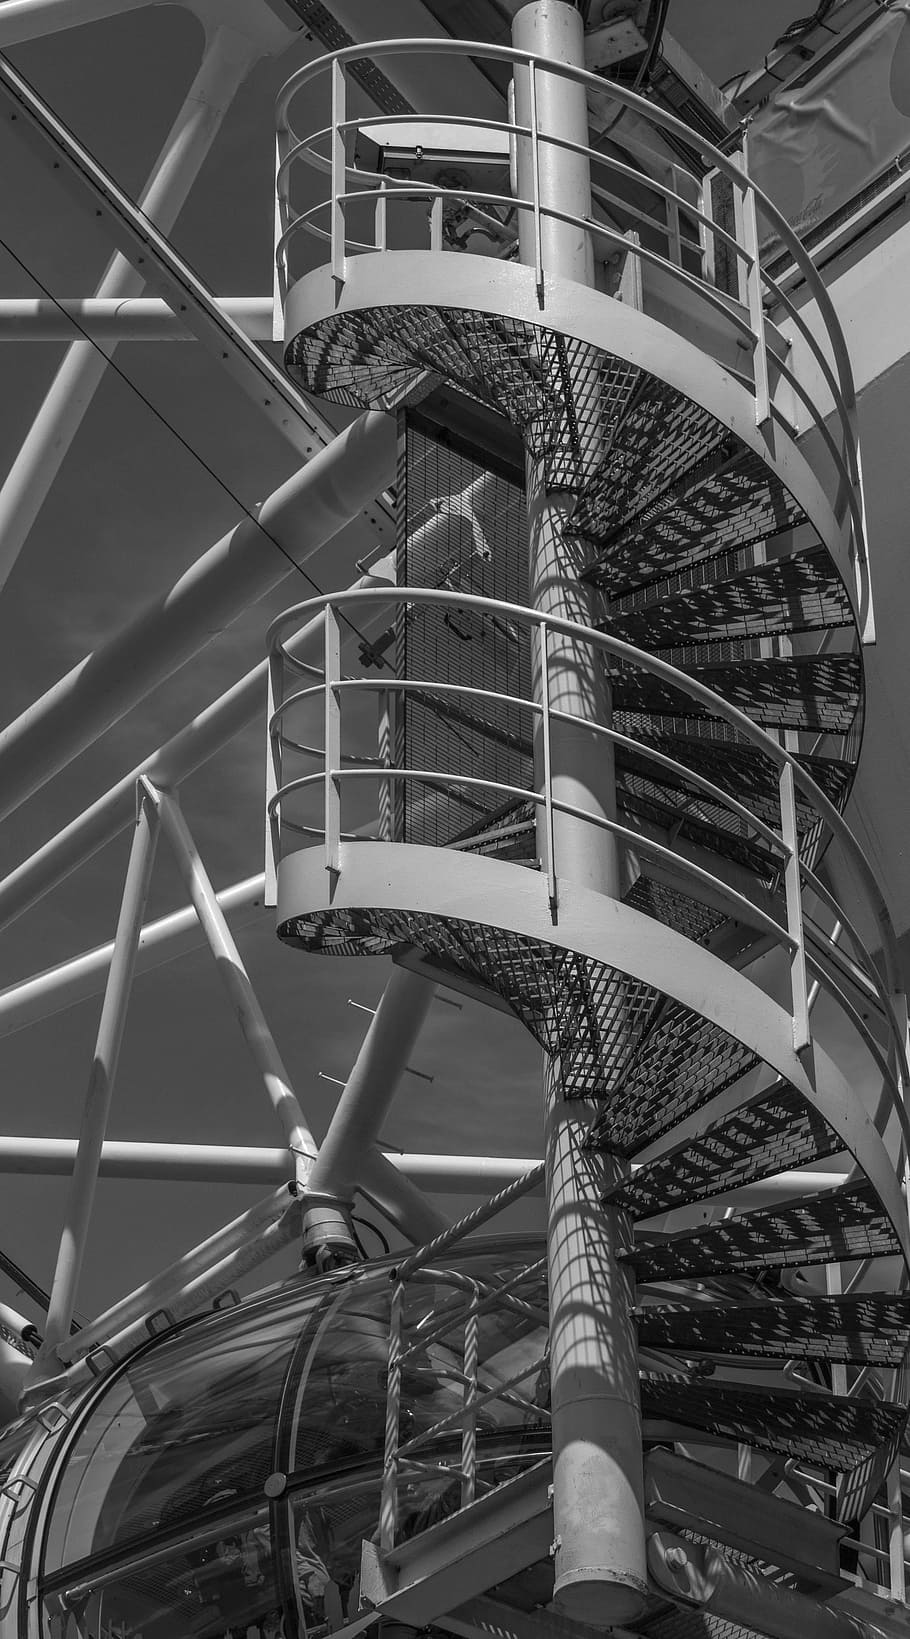 Escalera de caracol, blanco y negro, Londres, Támesis, London Eye, escalera, espiral, negro, blanco, arquitectura